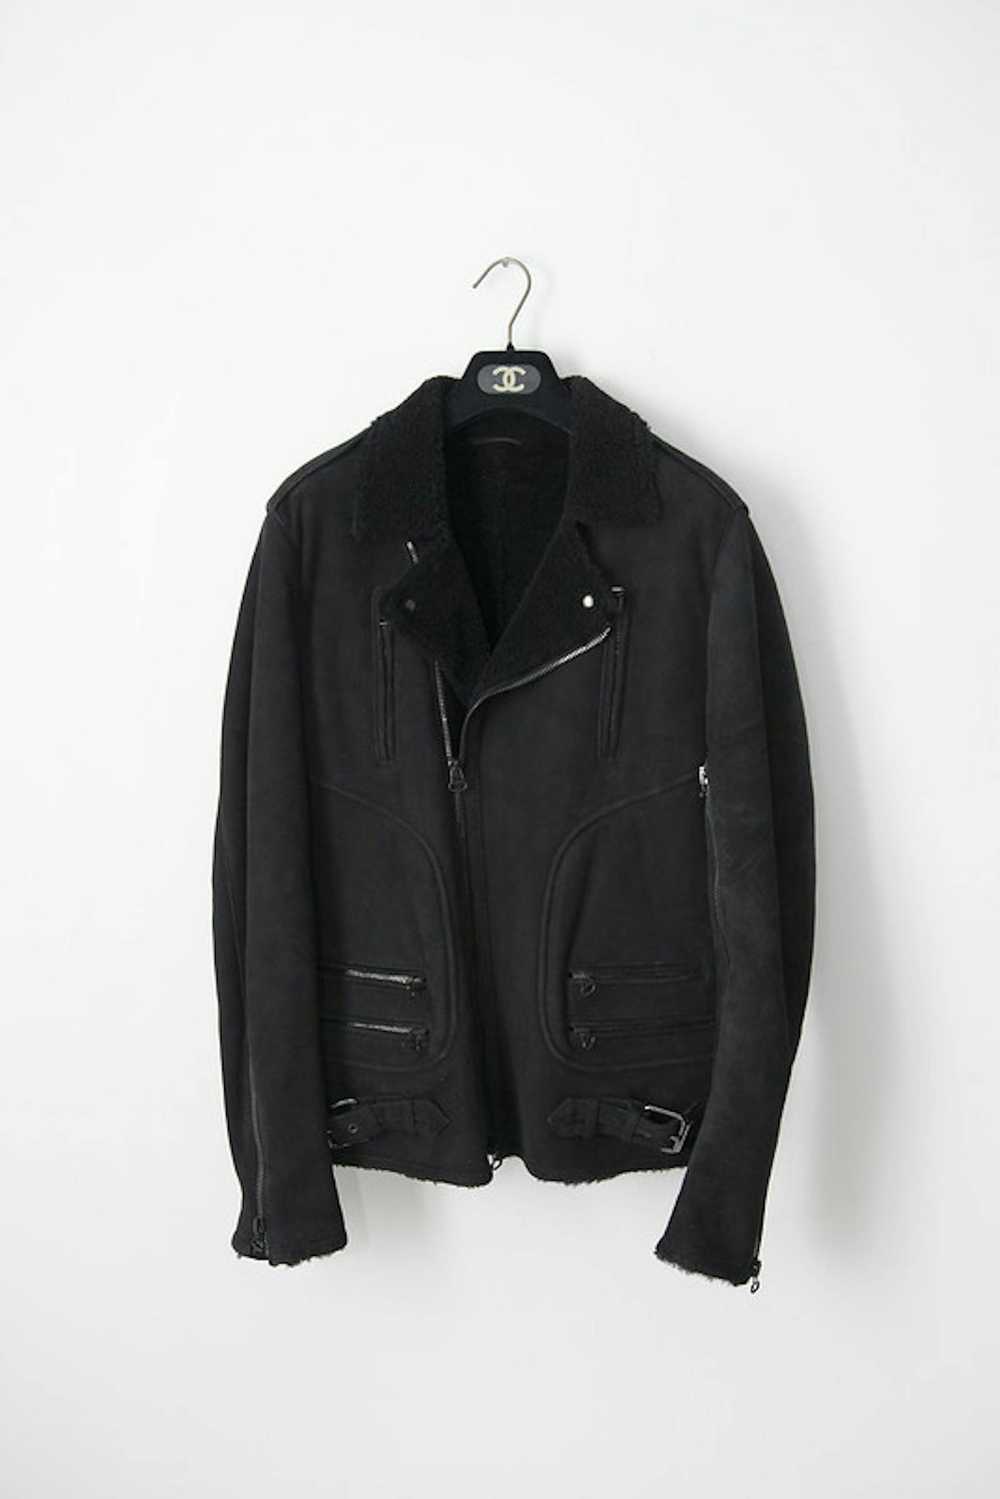 Balmain AW10 shearling perfecto leather jacket - image 1